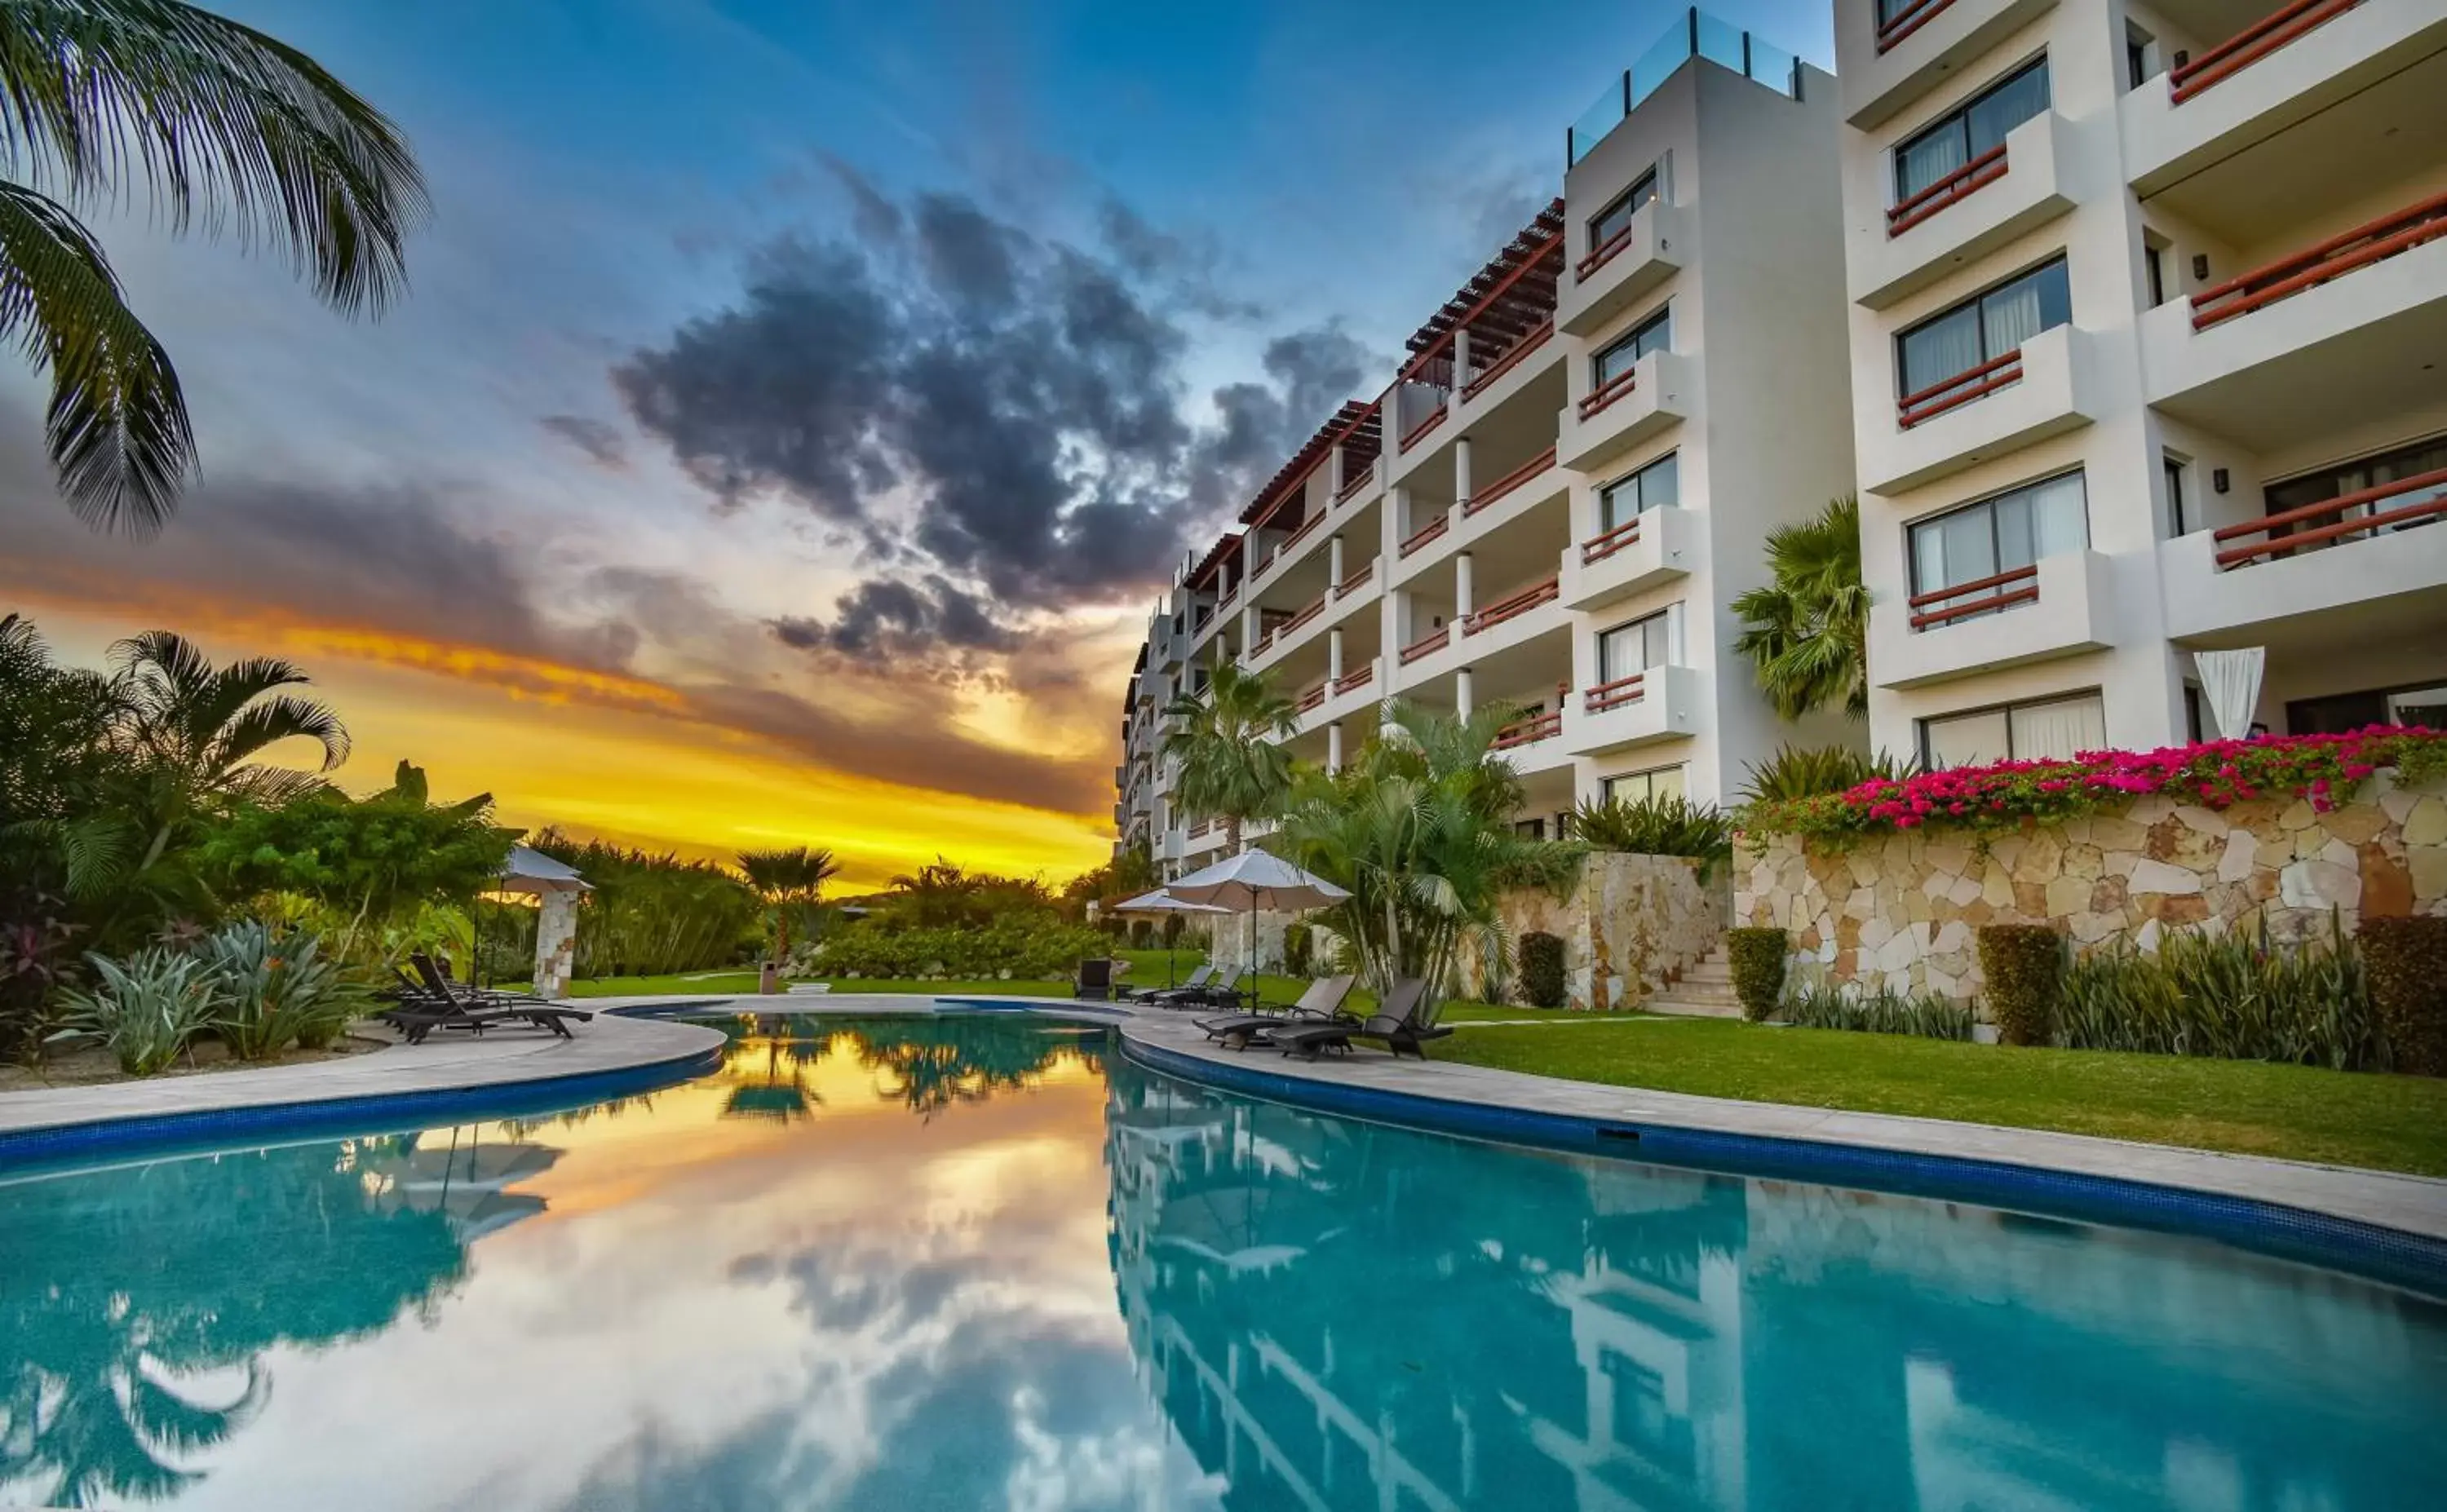 Swimming Pool in Alegranza Luxury Resort - All Master Suite